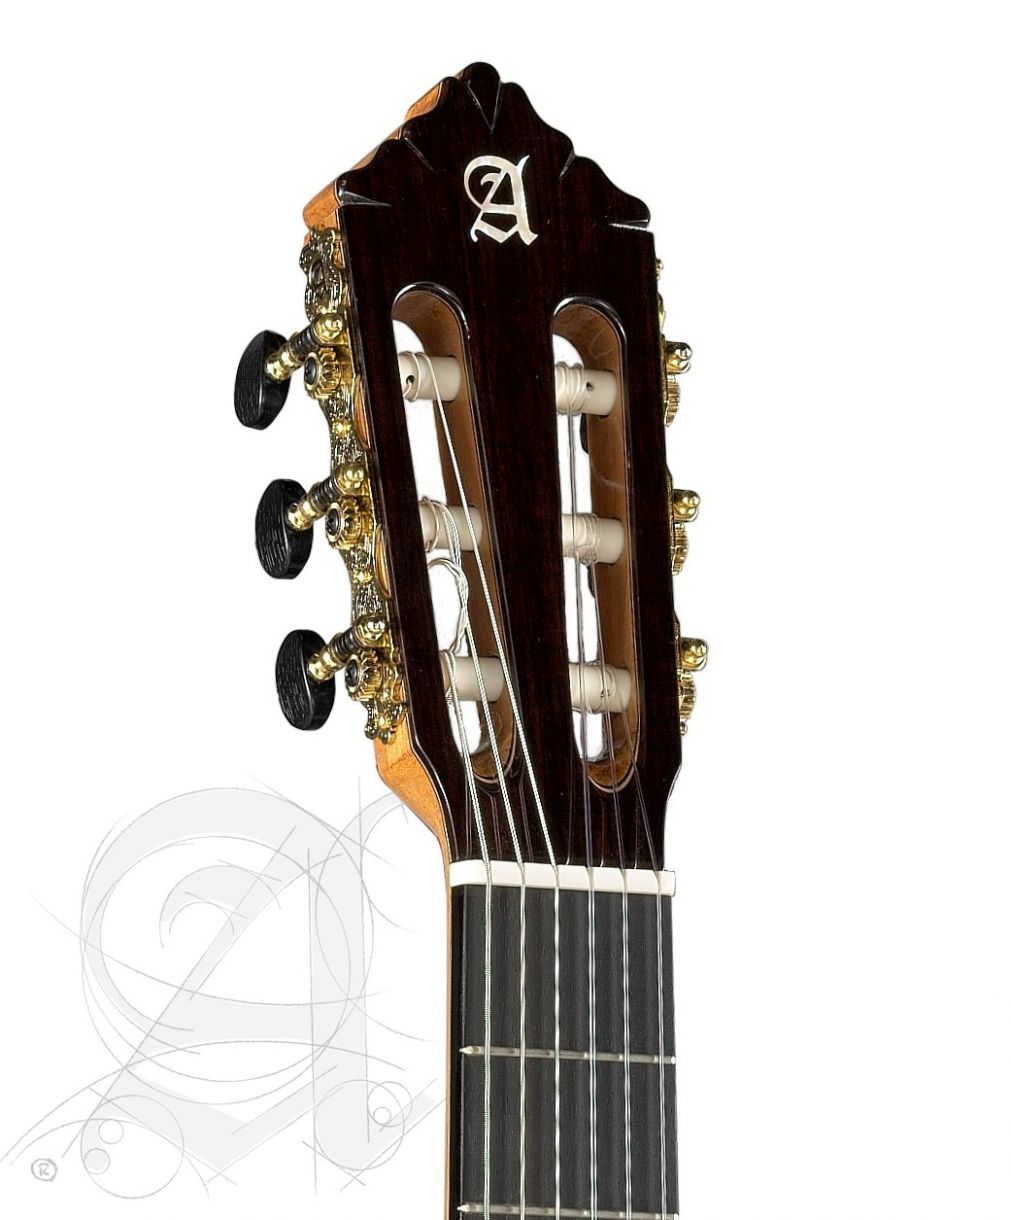 Alhambra 10FC Flamenco Guitar (with original hardcase)